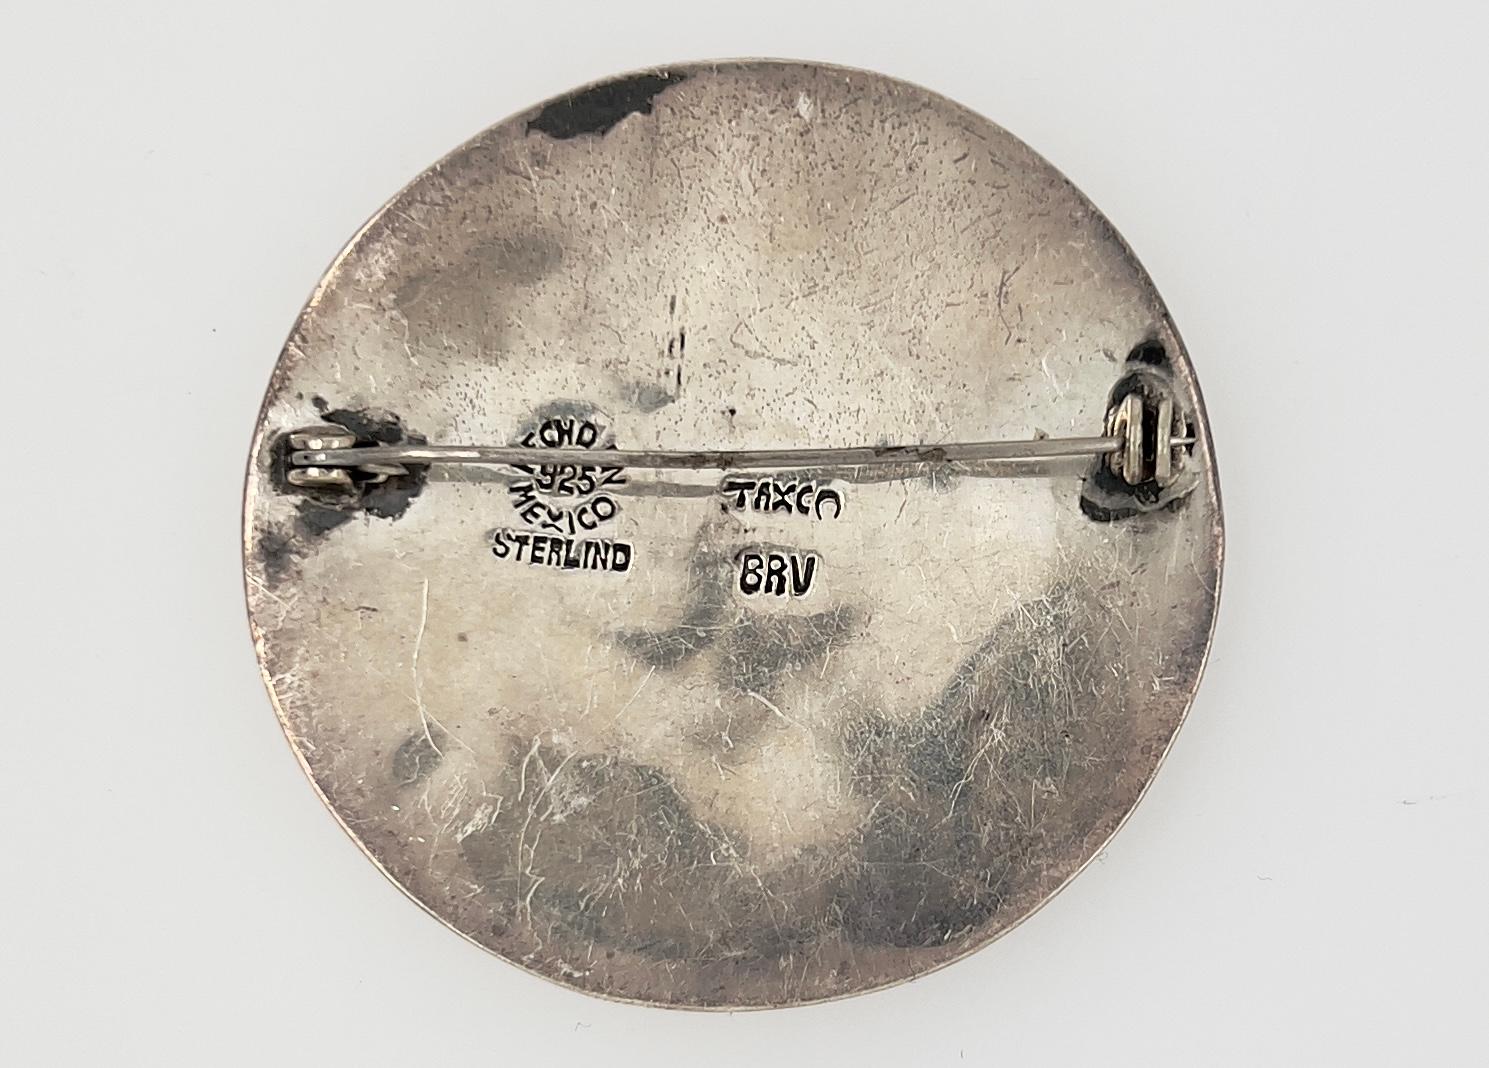 Metall: Silber
Antike
Durchmesser: 2 Zoll
Handgefertigt in Mexiko